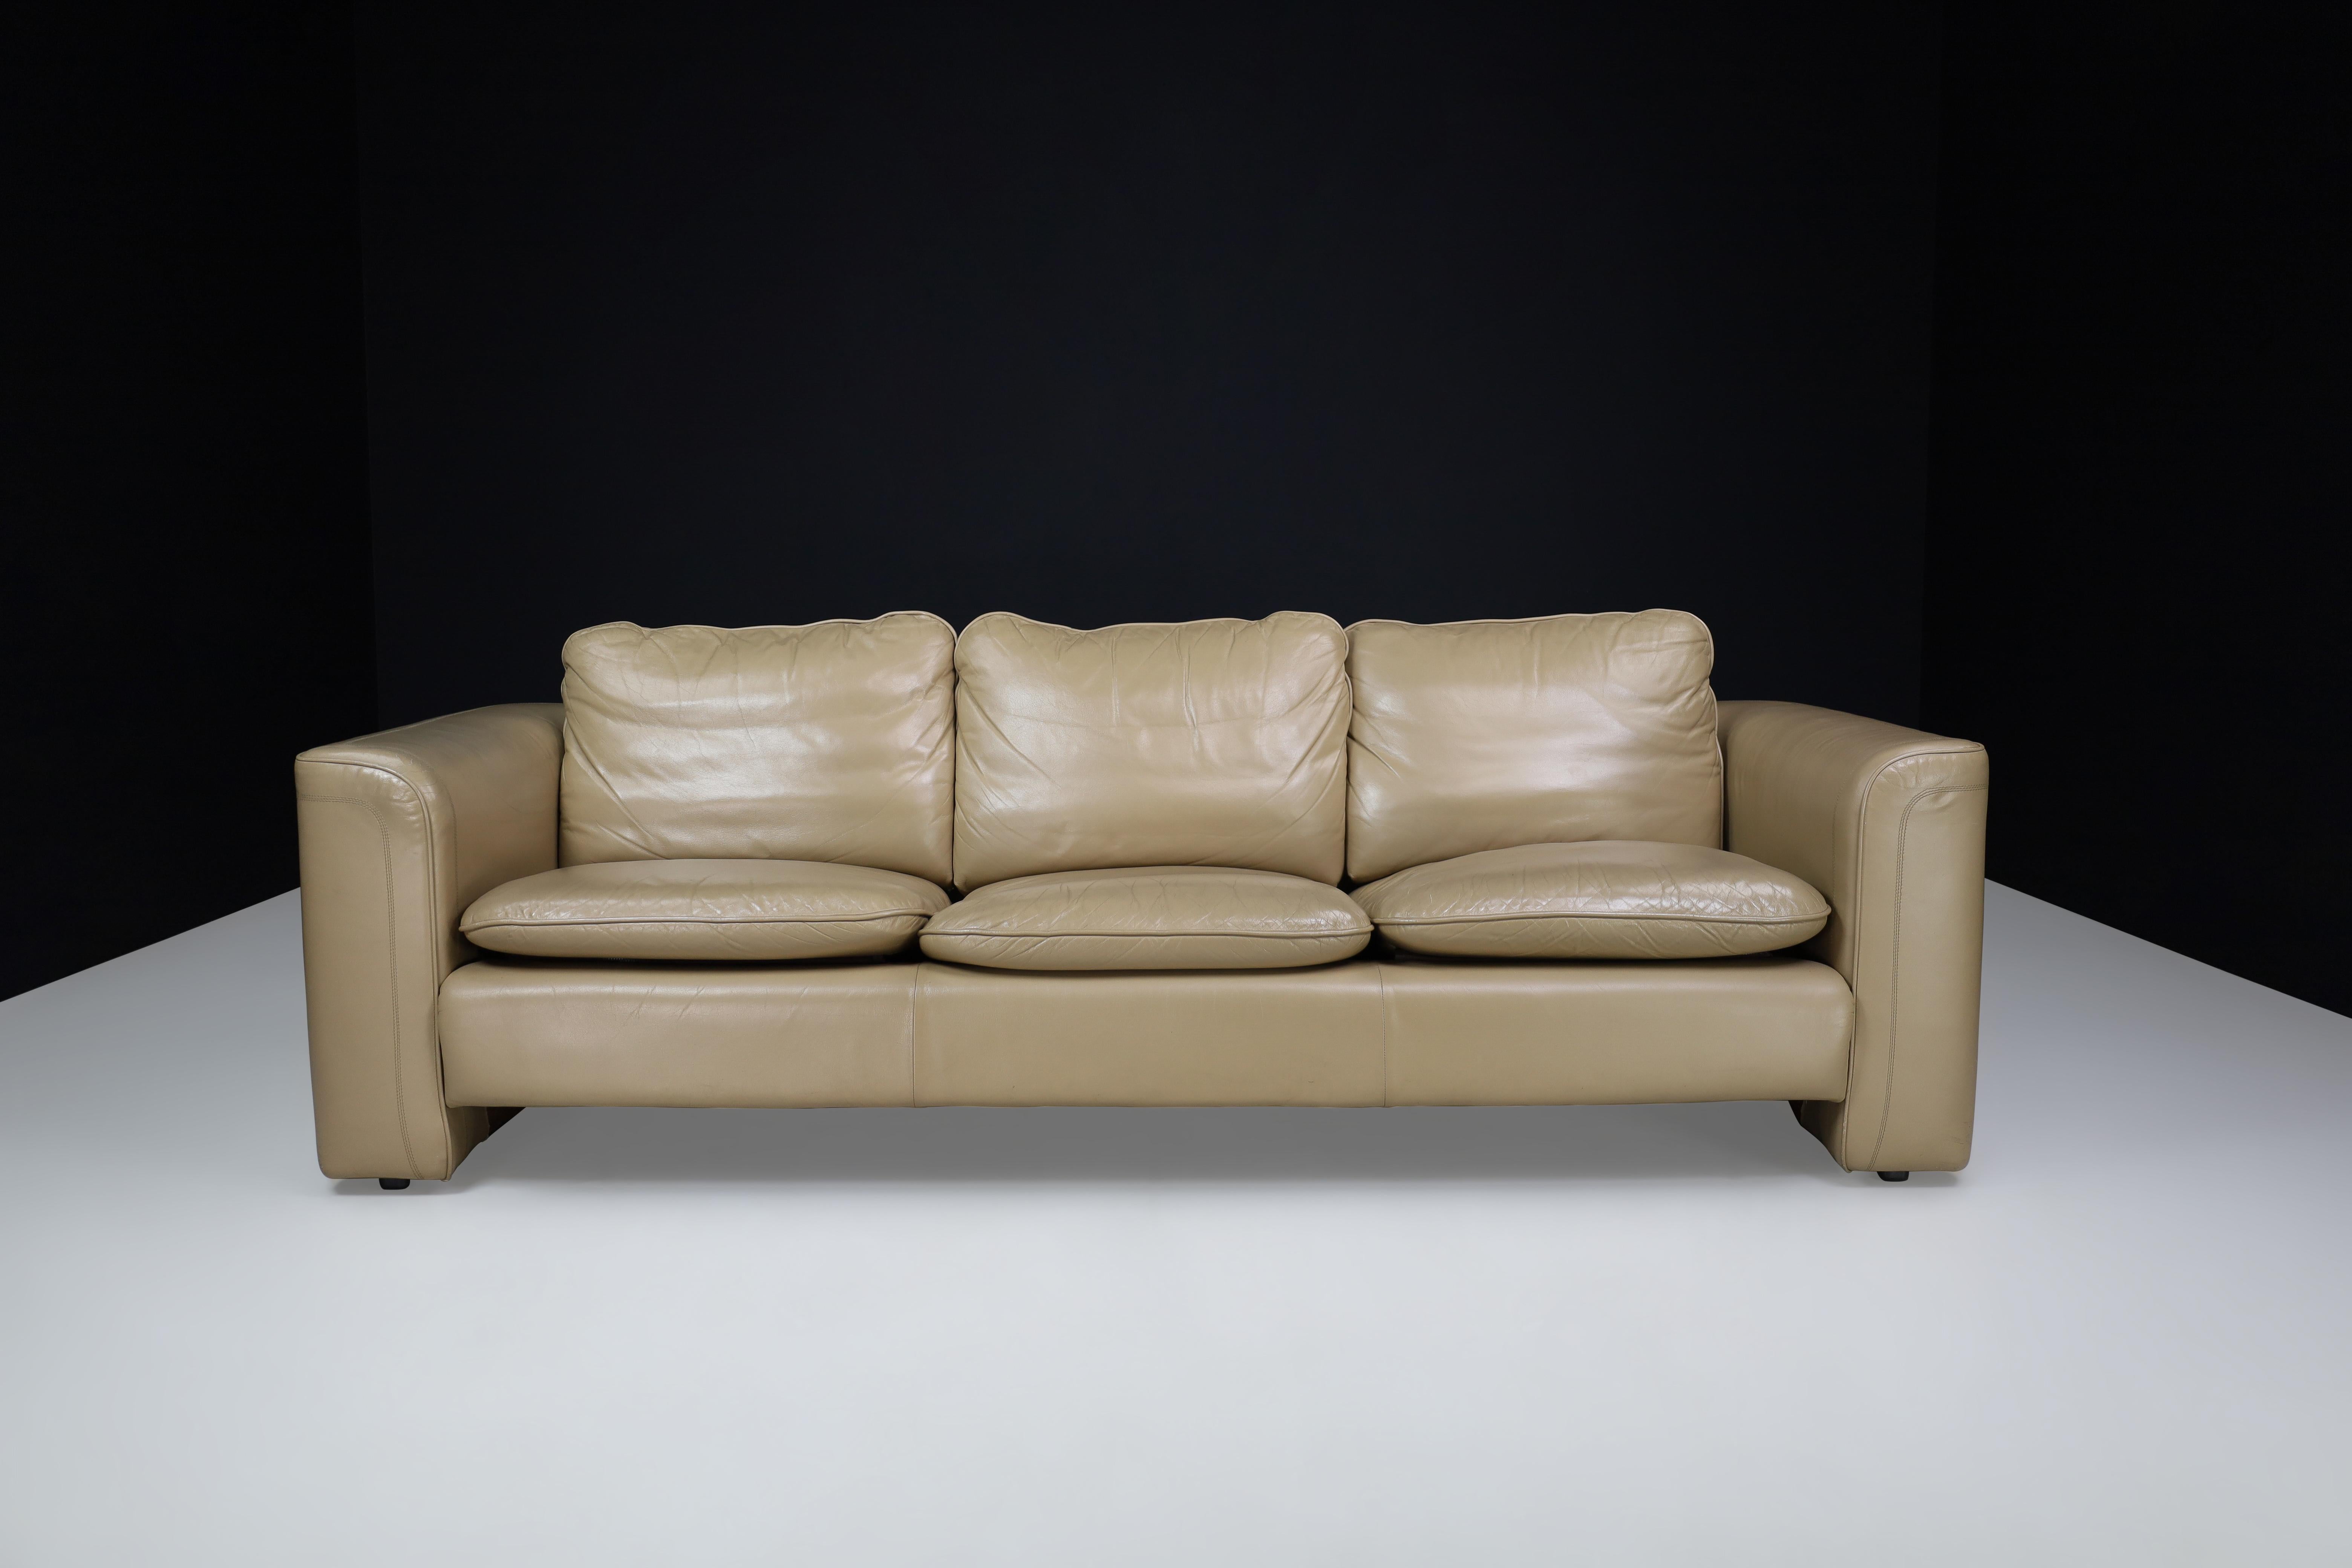 20th Century De Sede Ds 98 Leather Three-Seater Sofa, Switzerland, 1980 For Sale